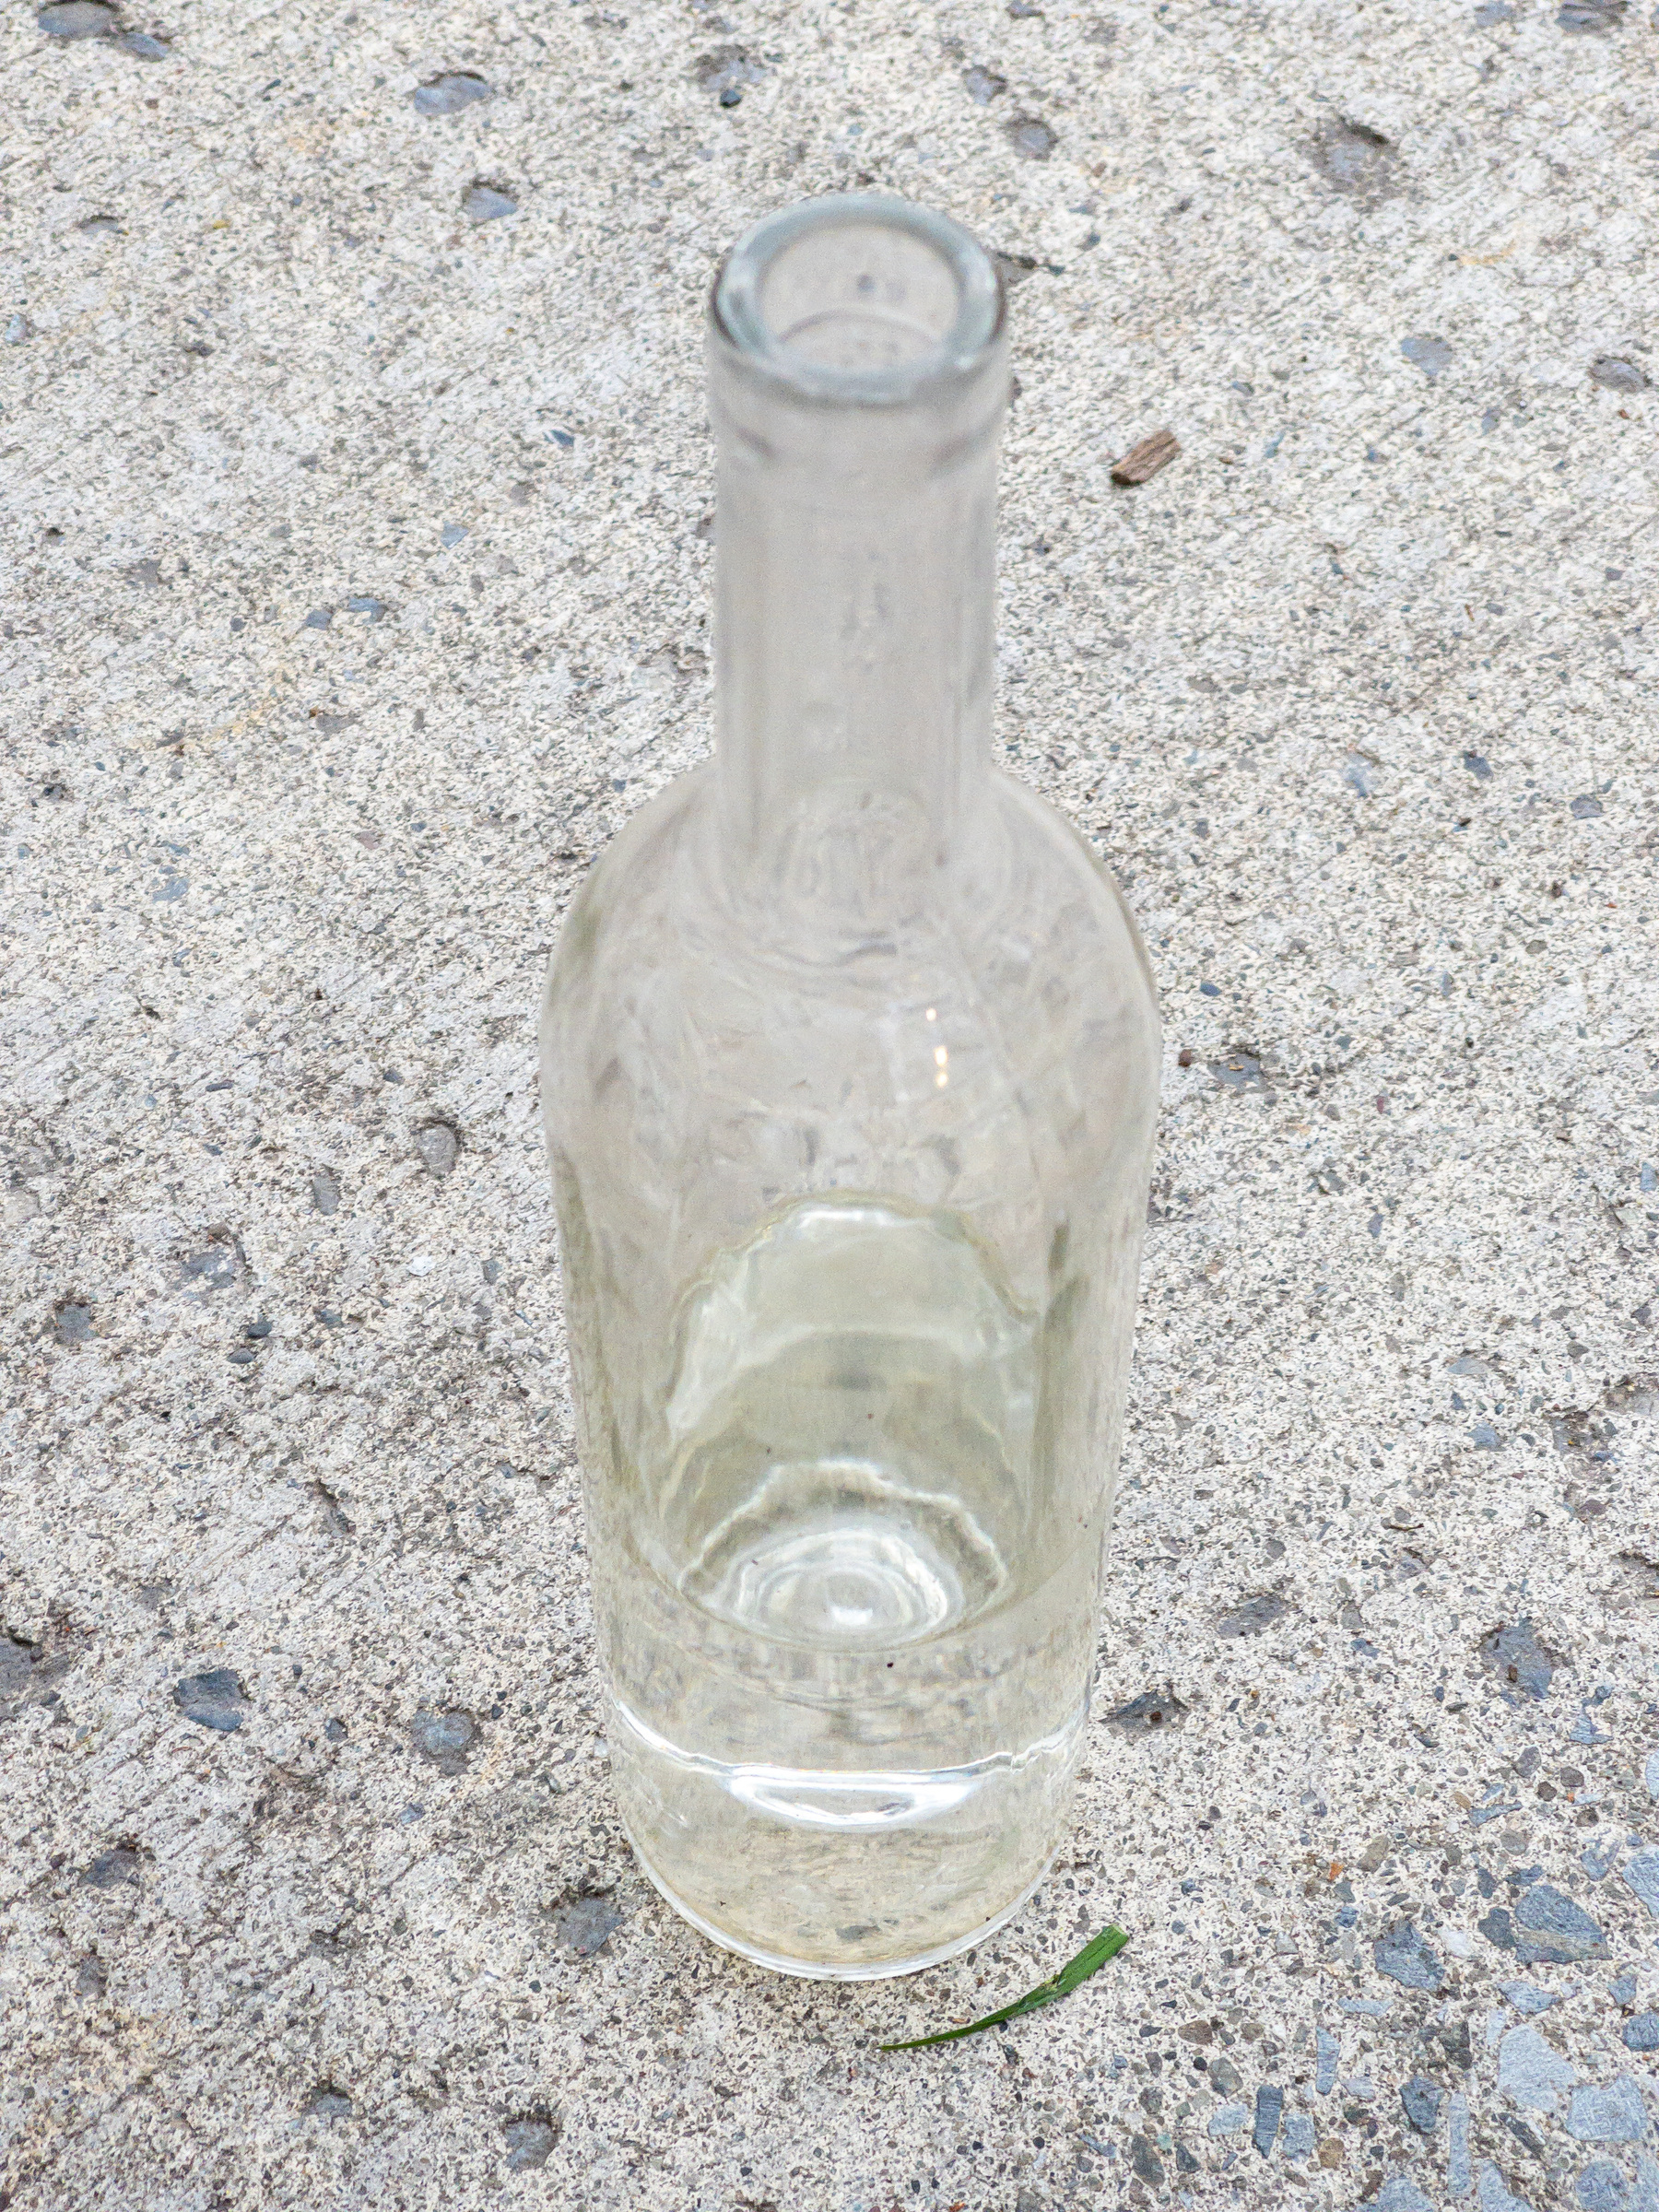 Random clear glass wine bottle half filled with water on the sidewalk.